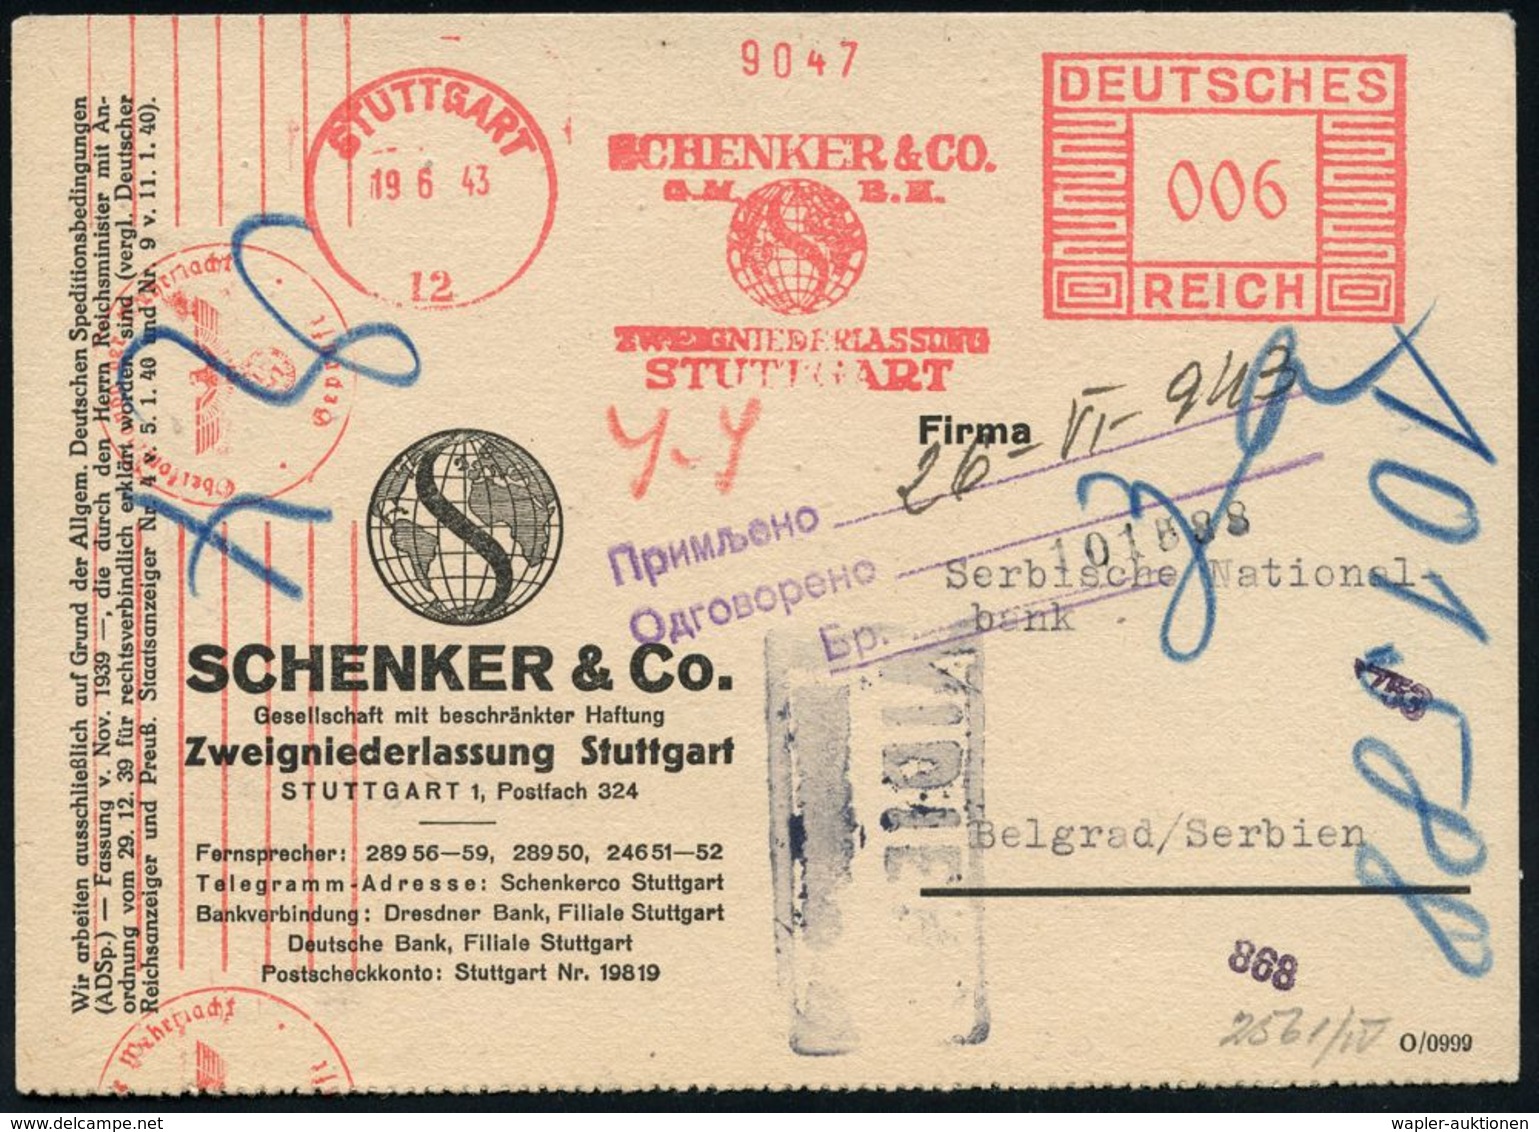 SPEDITION & FRACHT : STUTTGART/ 12/ SCHENKER & CO.. 1943 (19.8.) AFS 006 Pf. (Firmen-Logo: Globus) + Roter OKW-Band-Zens - Cars